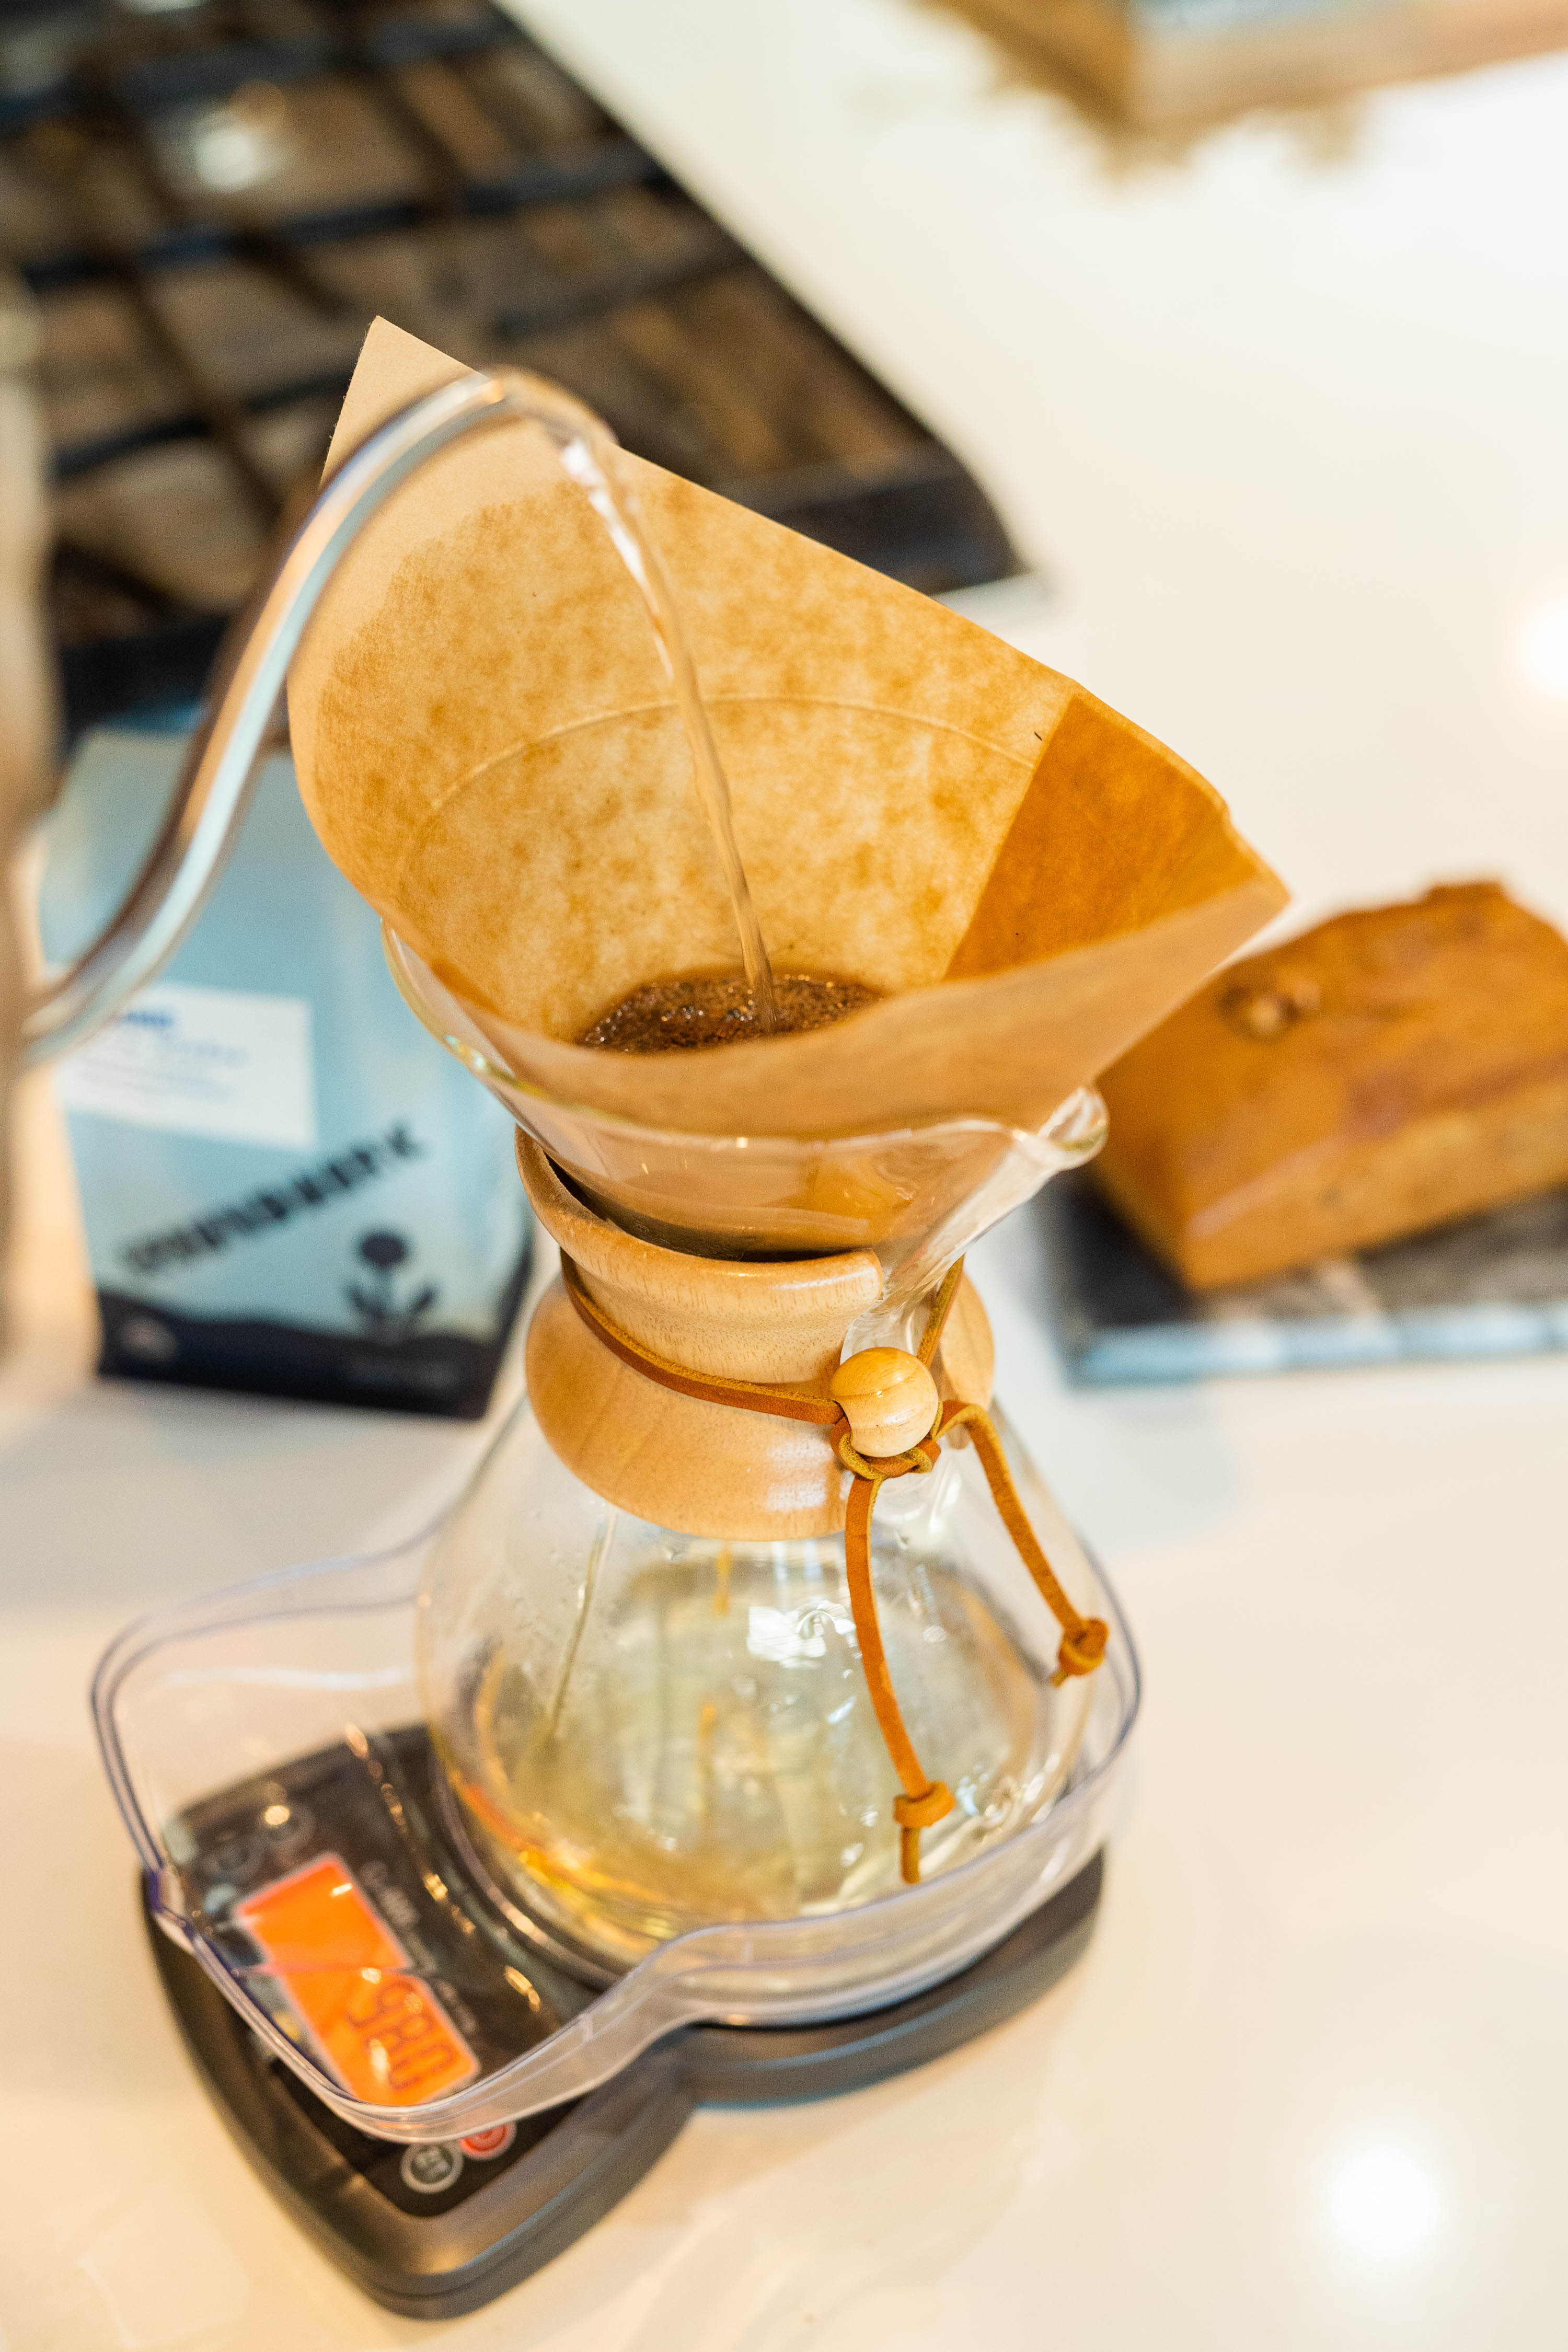 How to Keep Chemex Coffee Warm